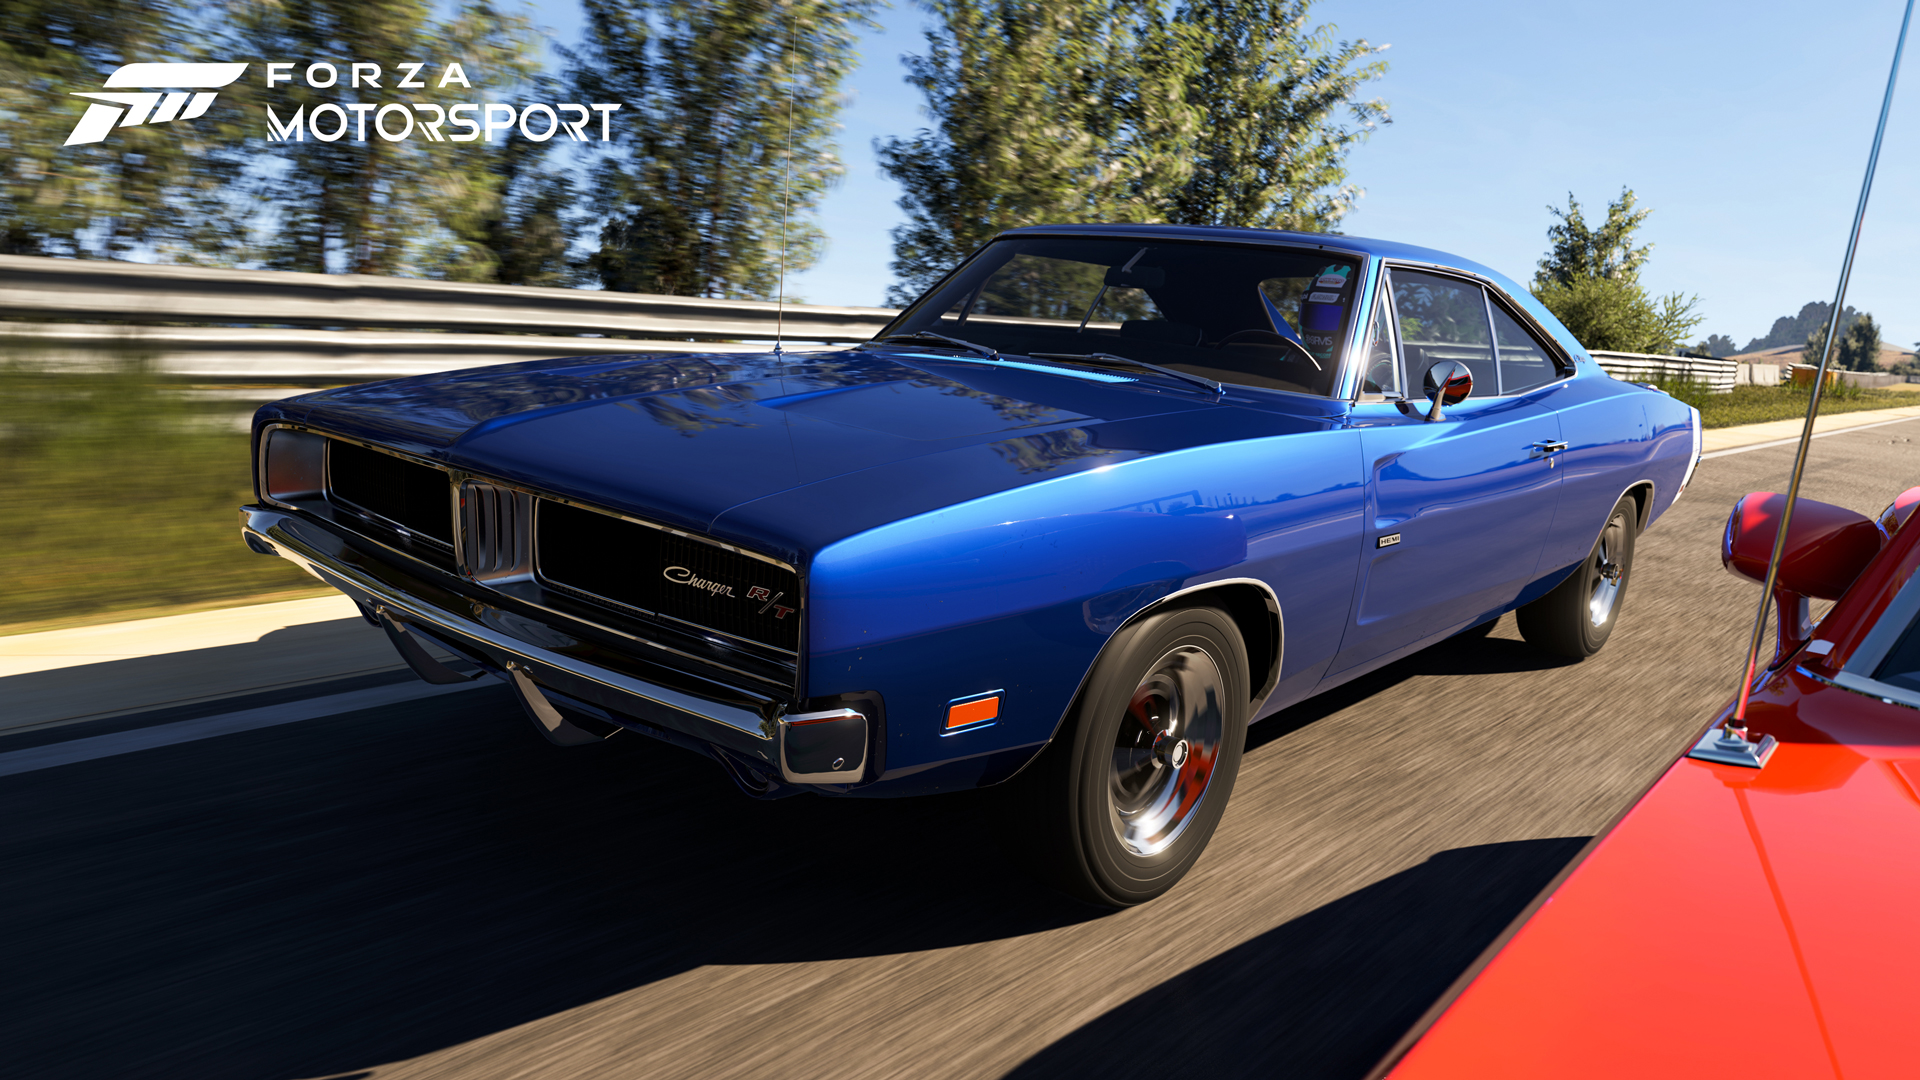 Forza Motorsport: Everything know far GamesRadar+